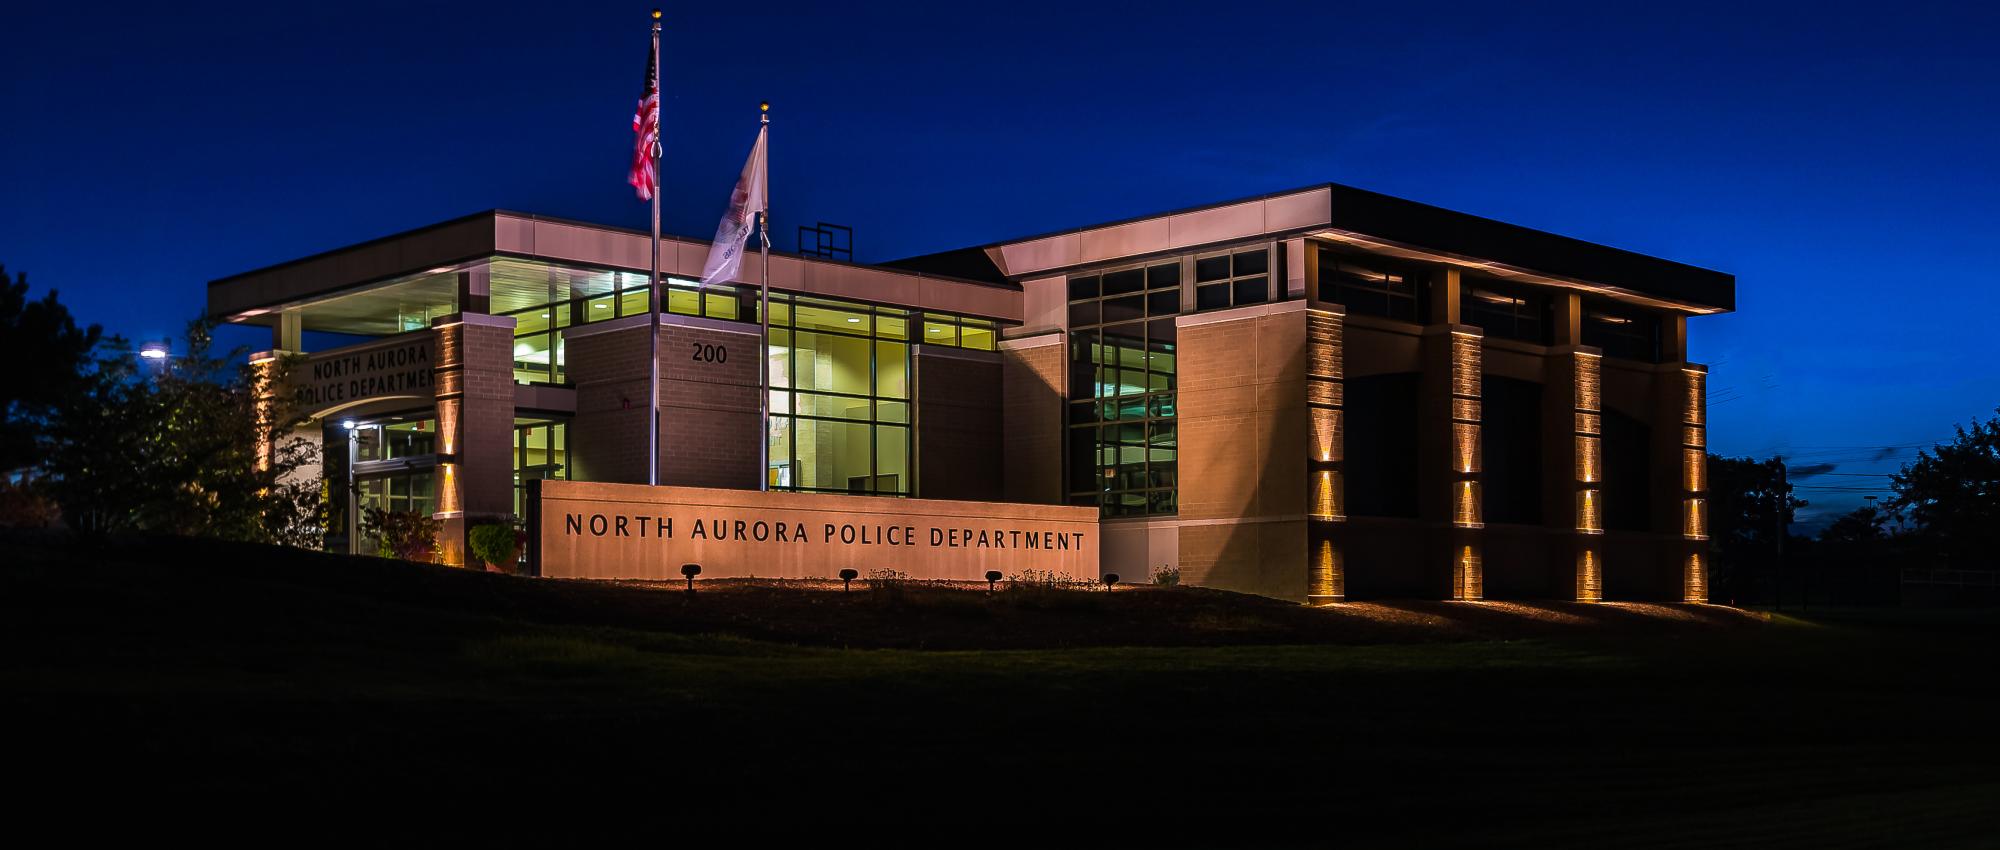 North Aurora Police Department 